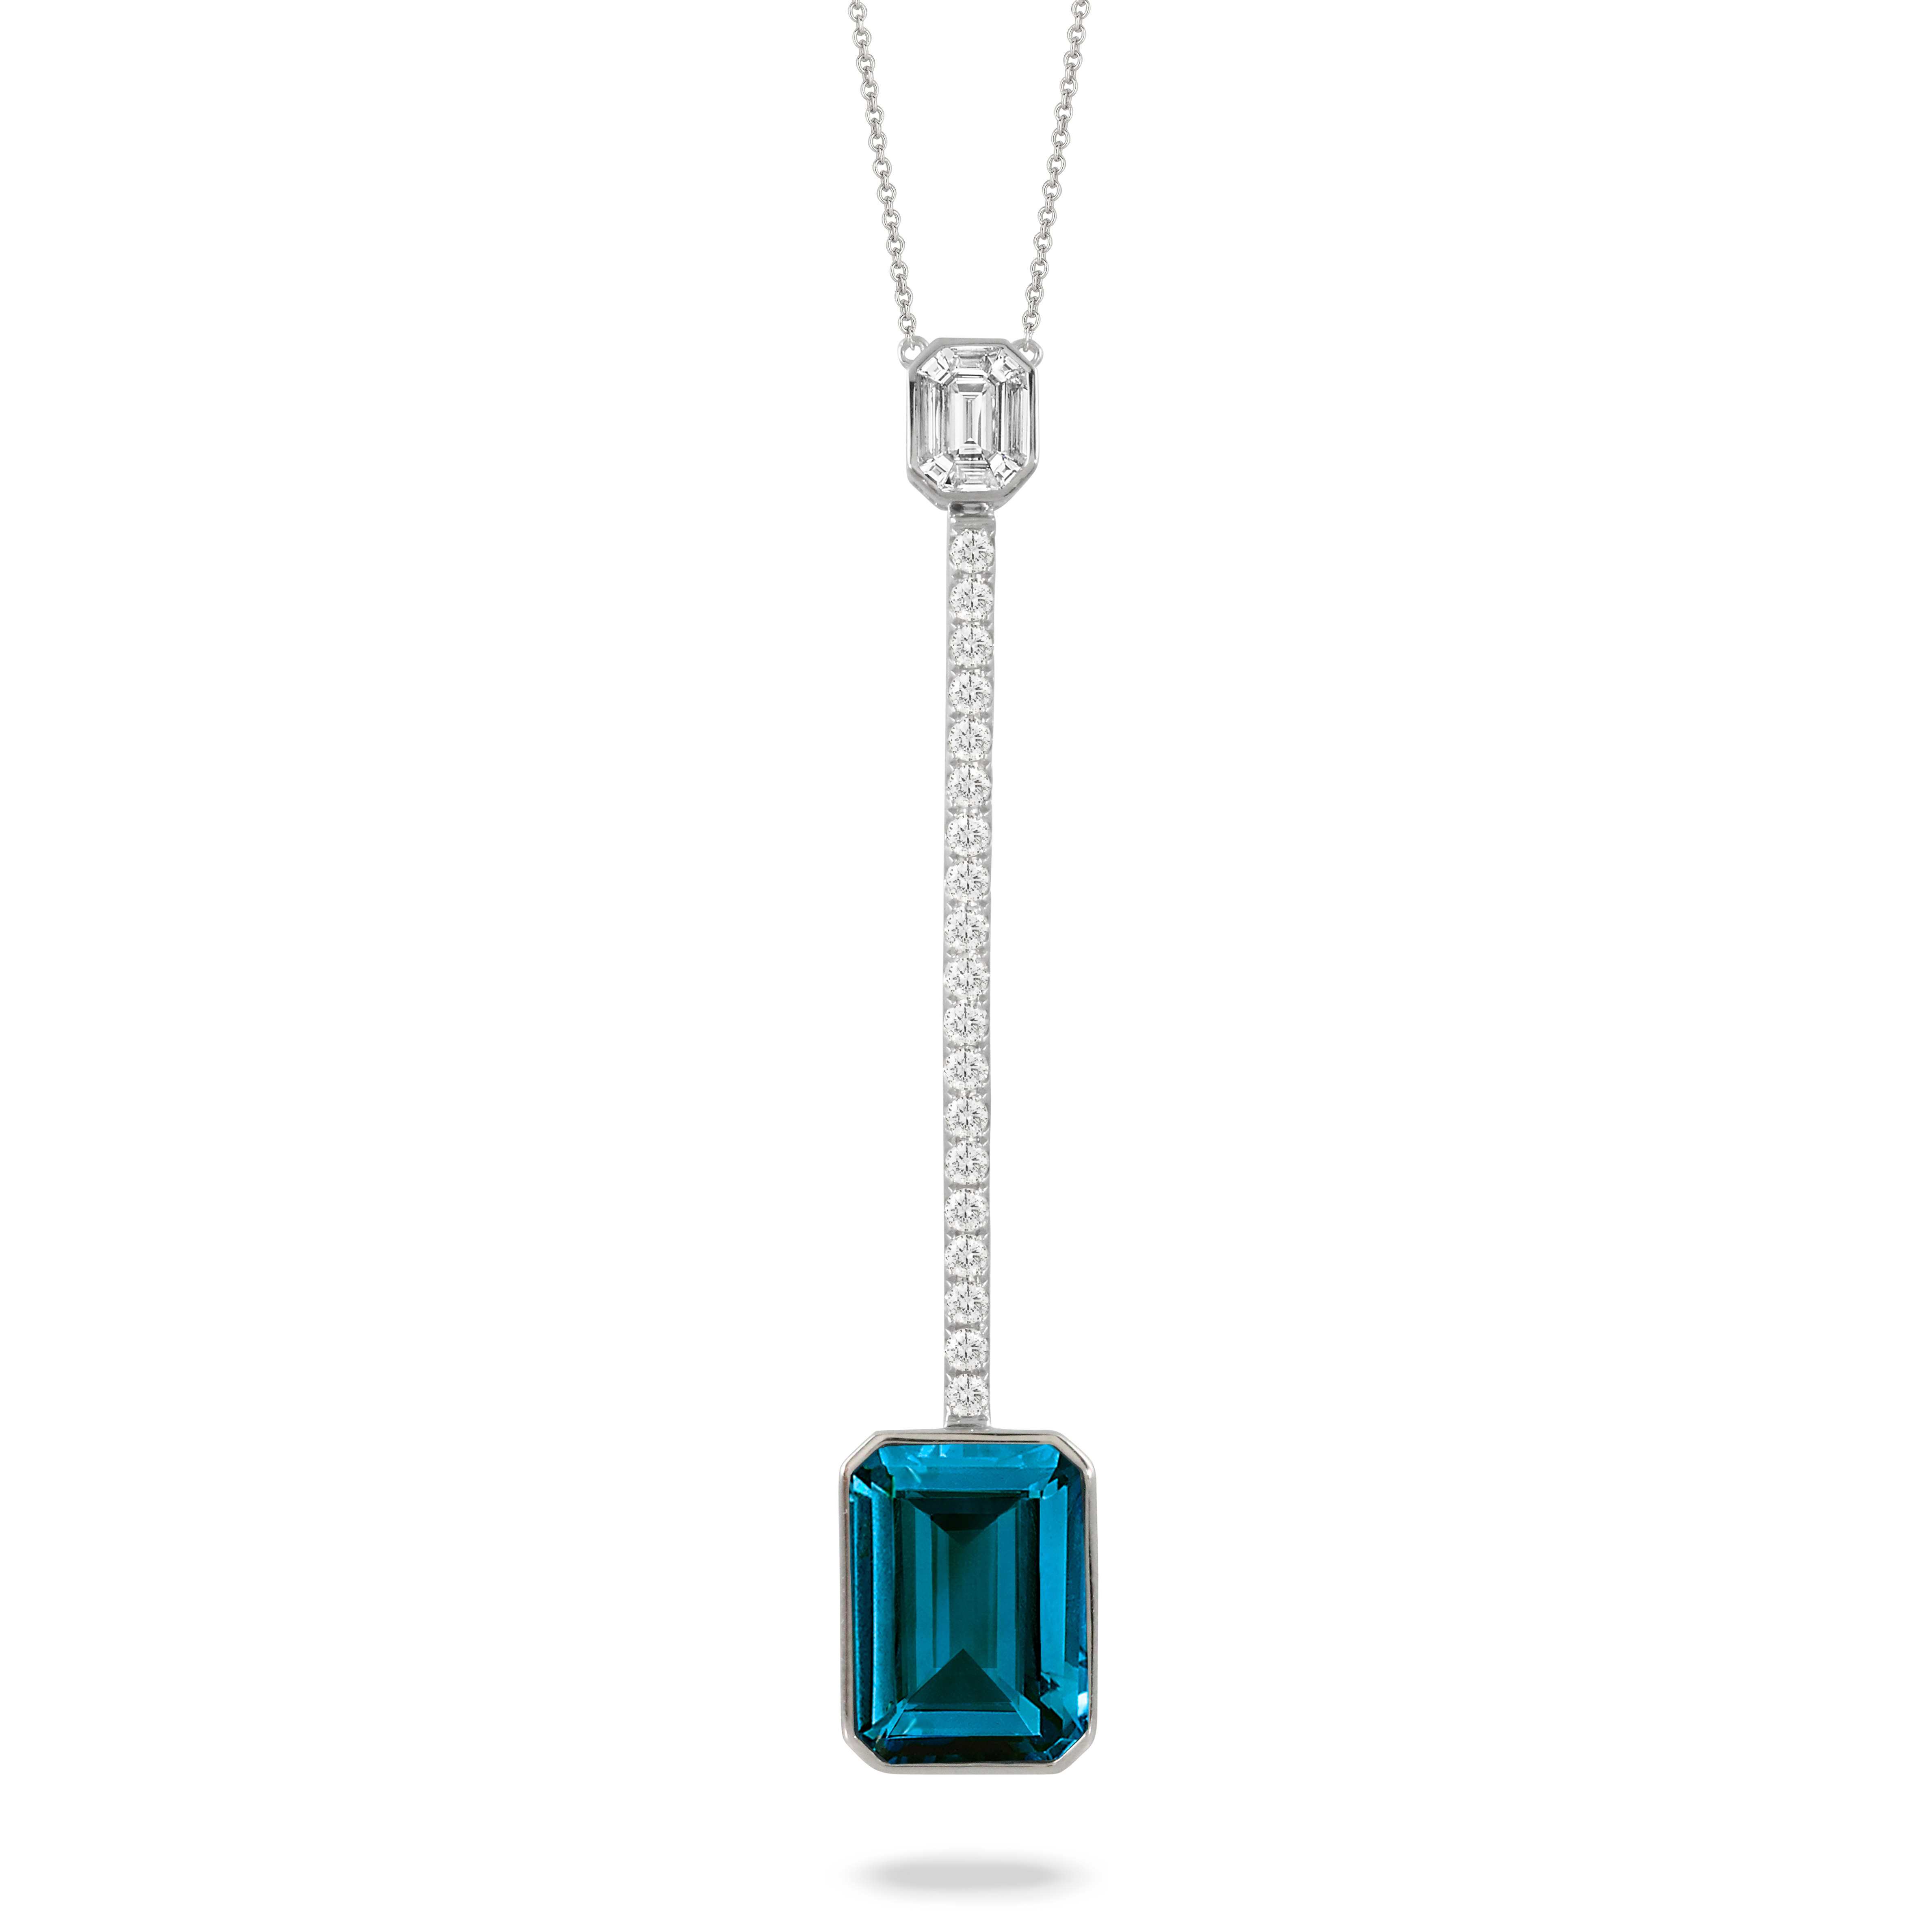 18K White Gold London Blue Topaz Necklace - 18K White Gold Invisible Set Diamond Necklace With London Blue Topaz